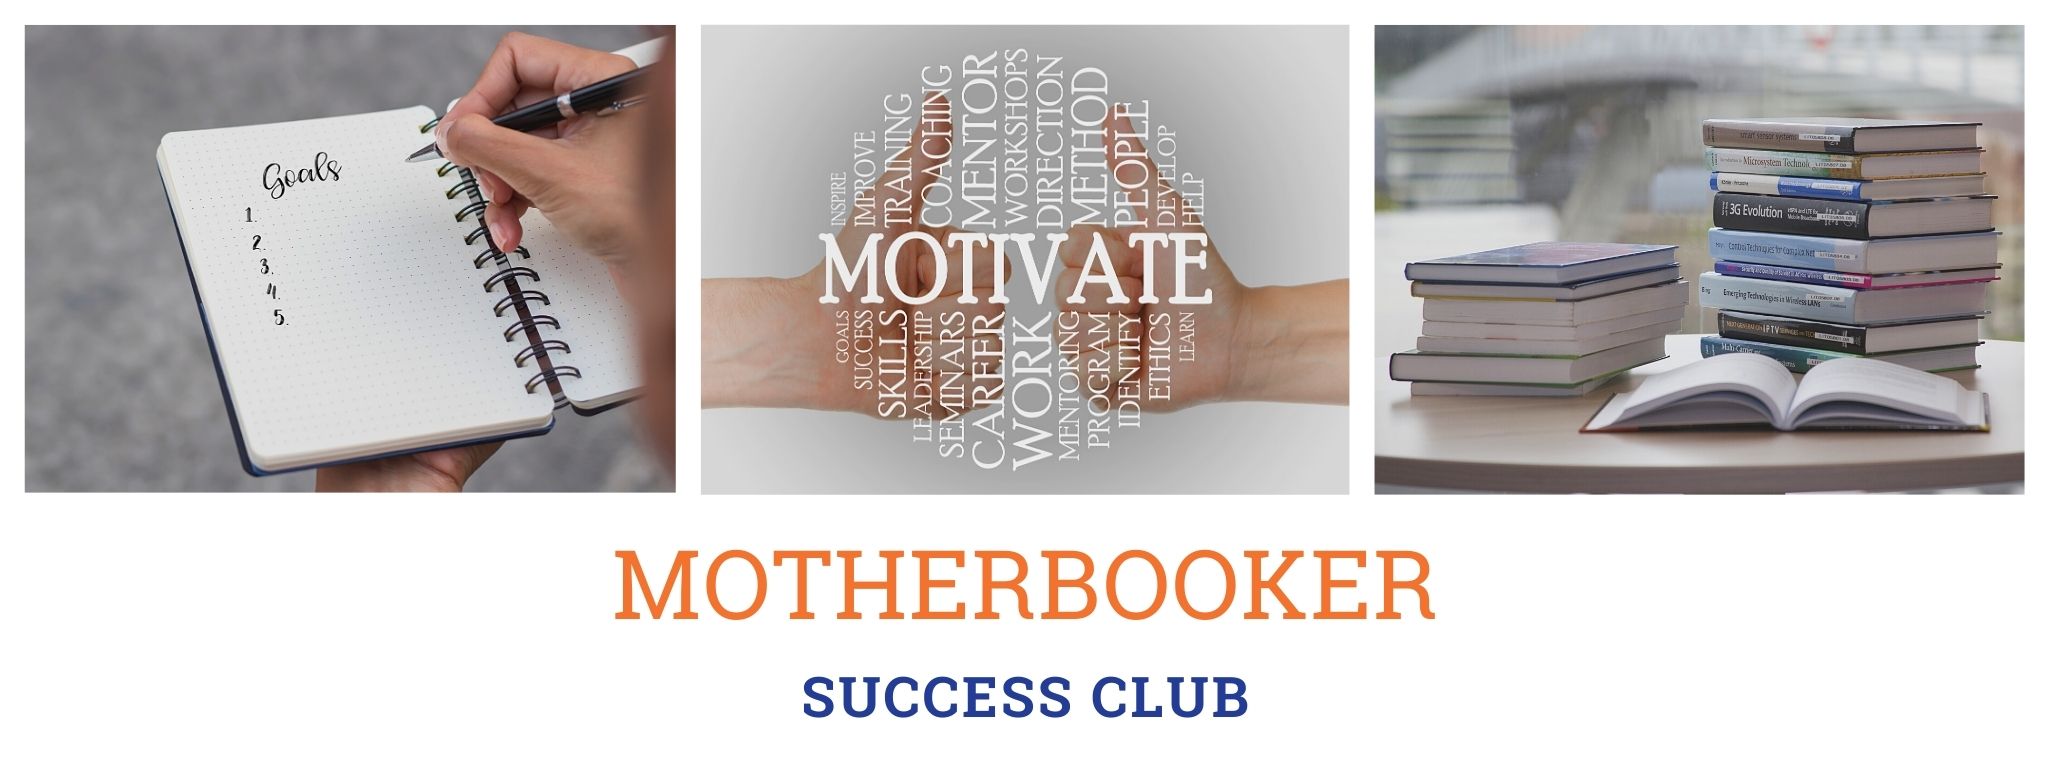 Michelle-Emerson-MotherBooker-Success-Club